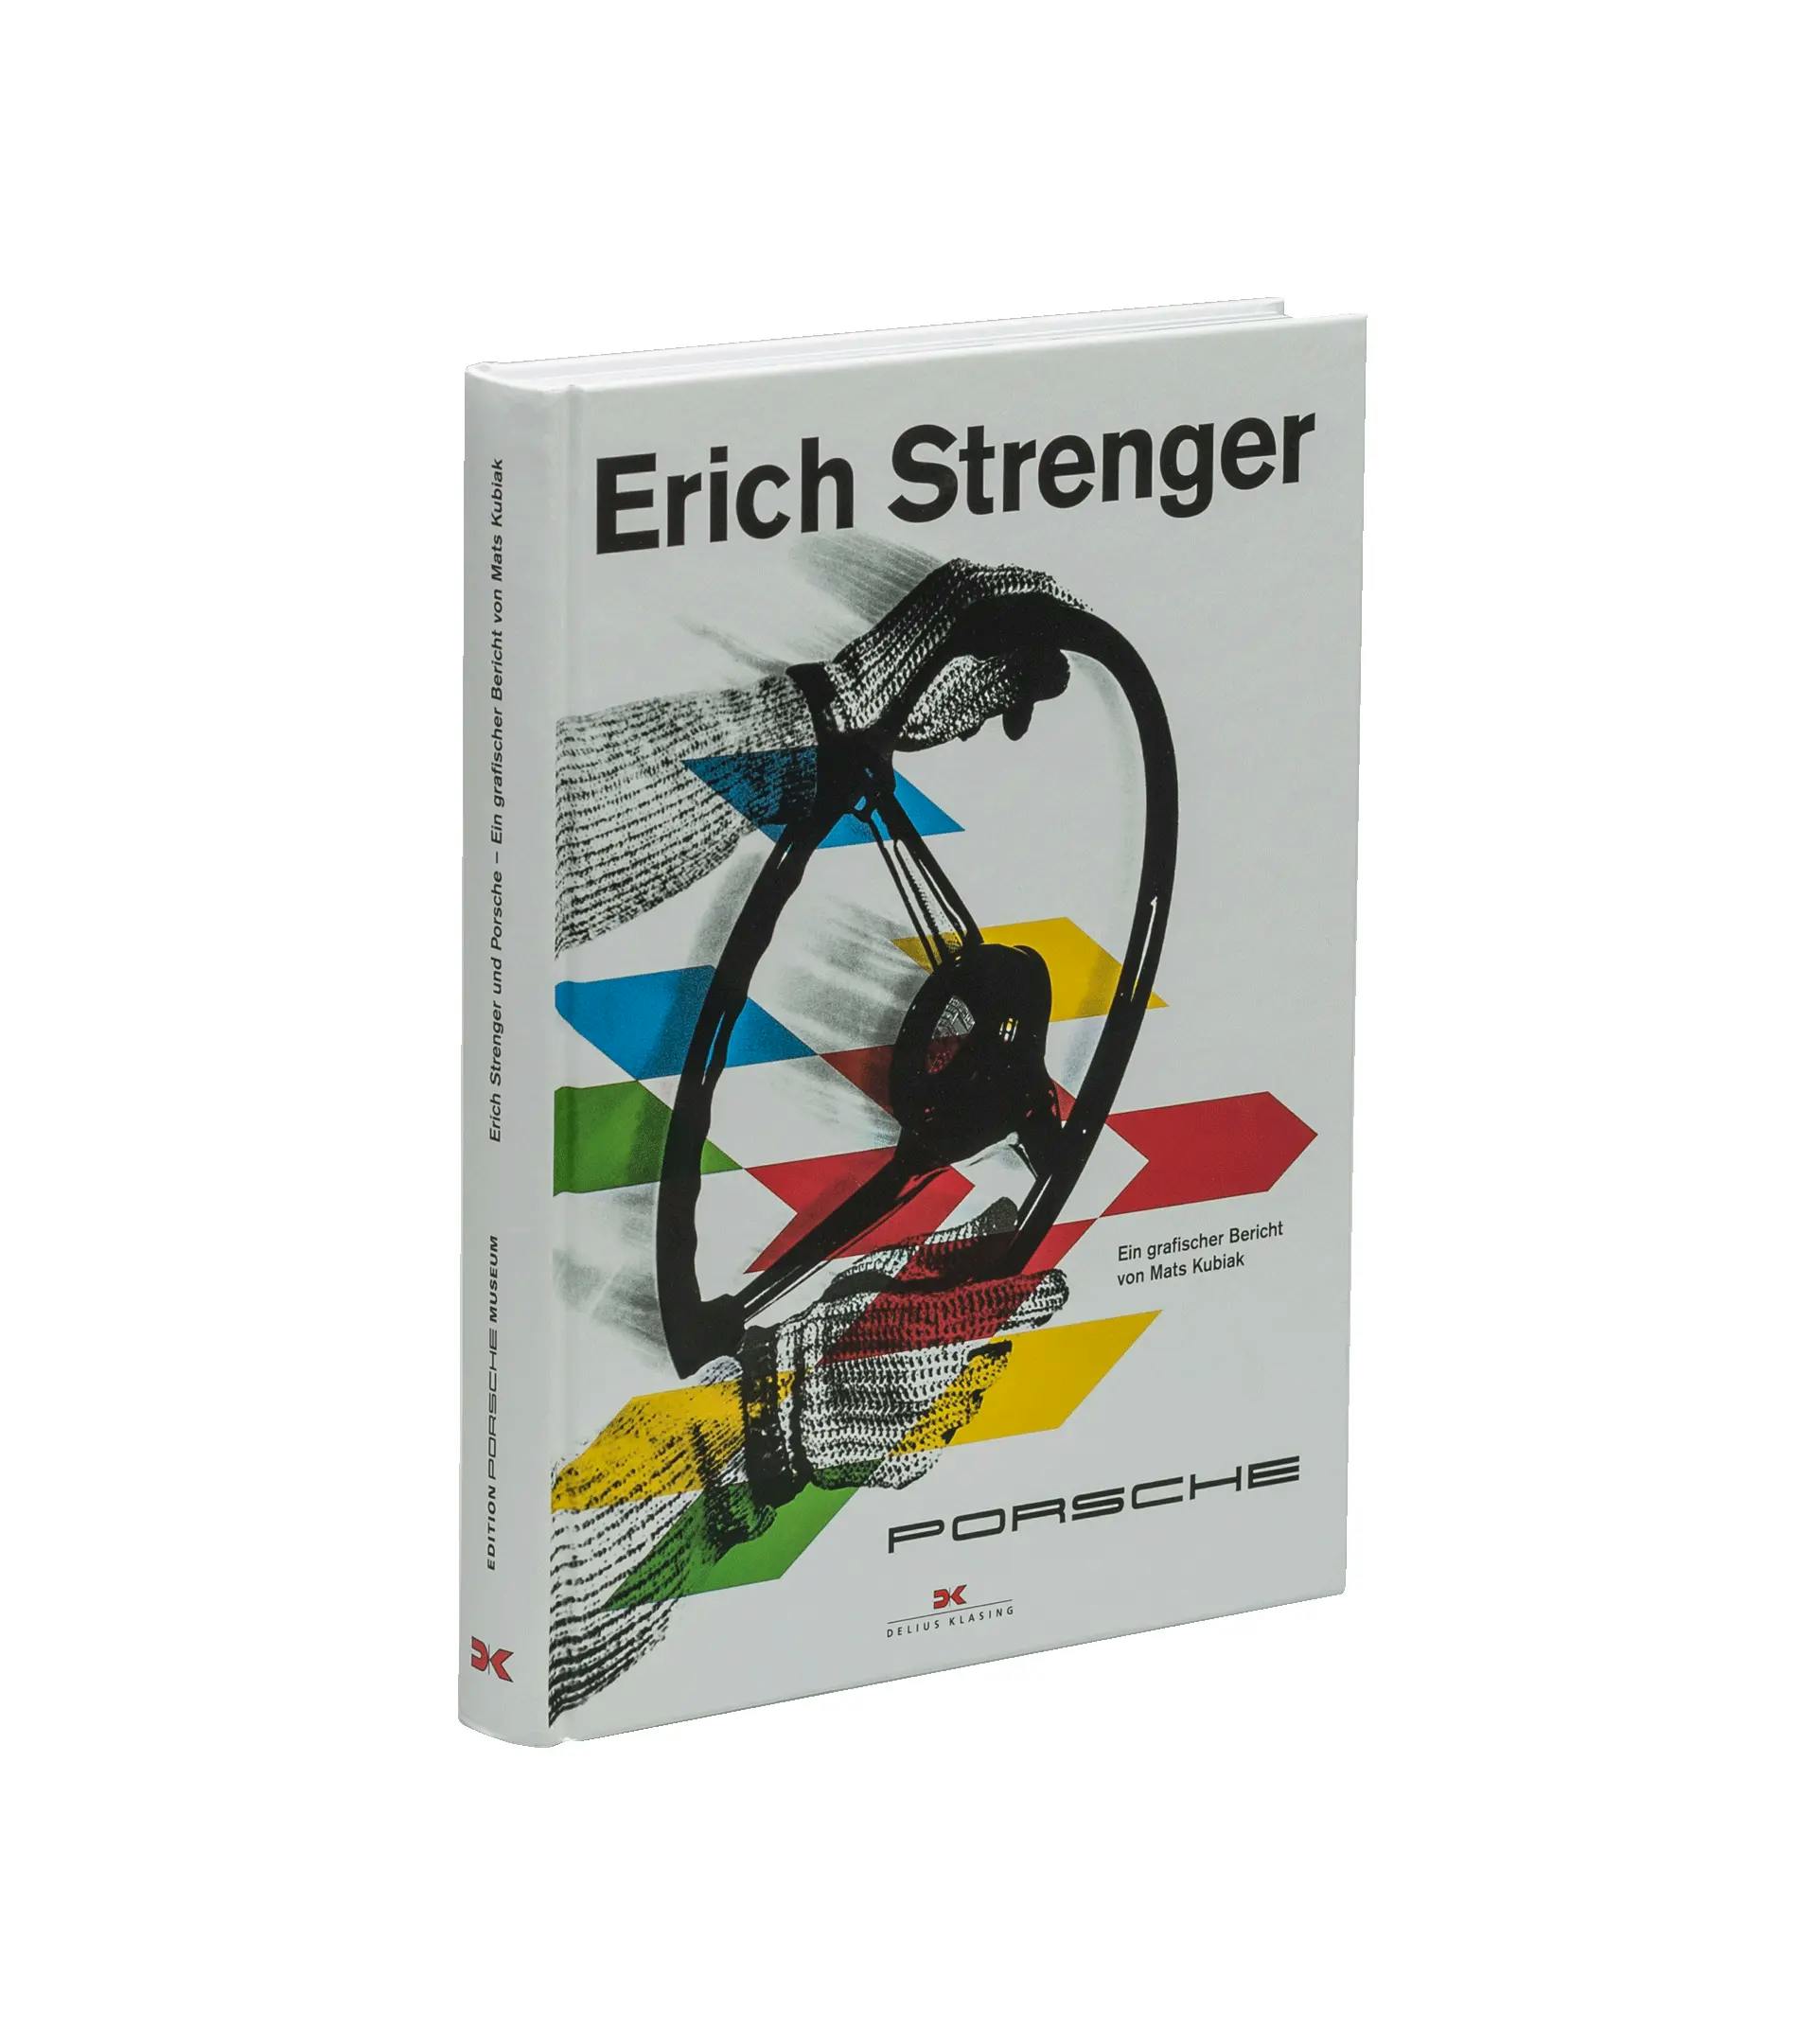 Livre E. Strenger und Porsche (EPM) thumbnail 0